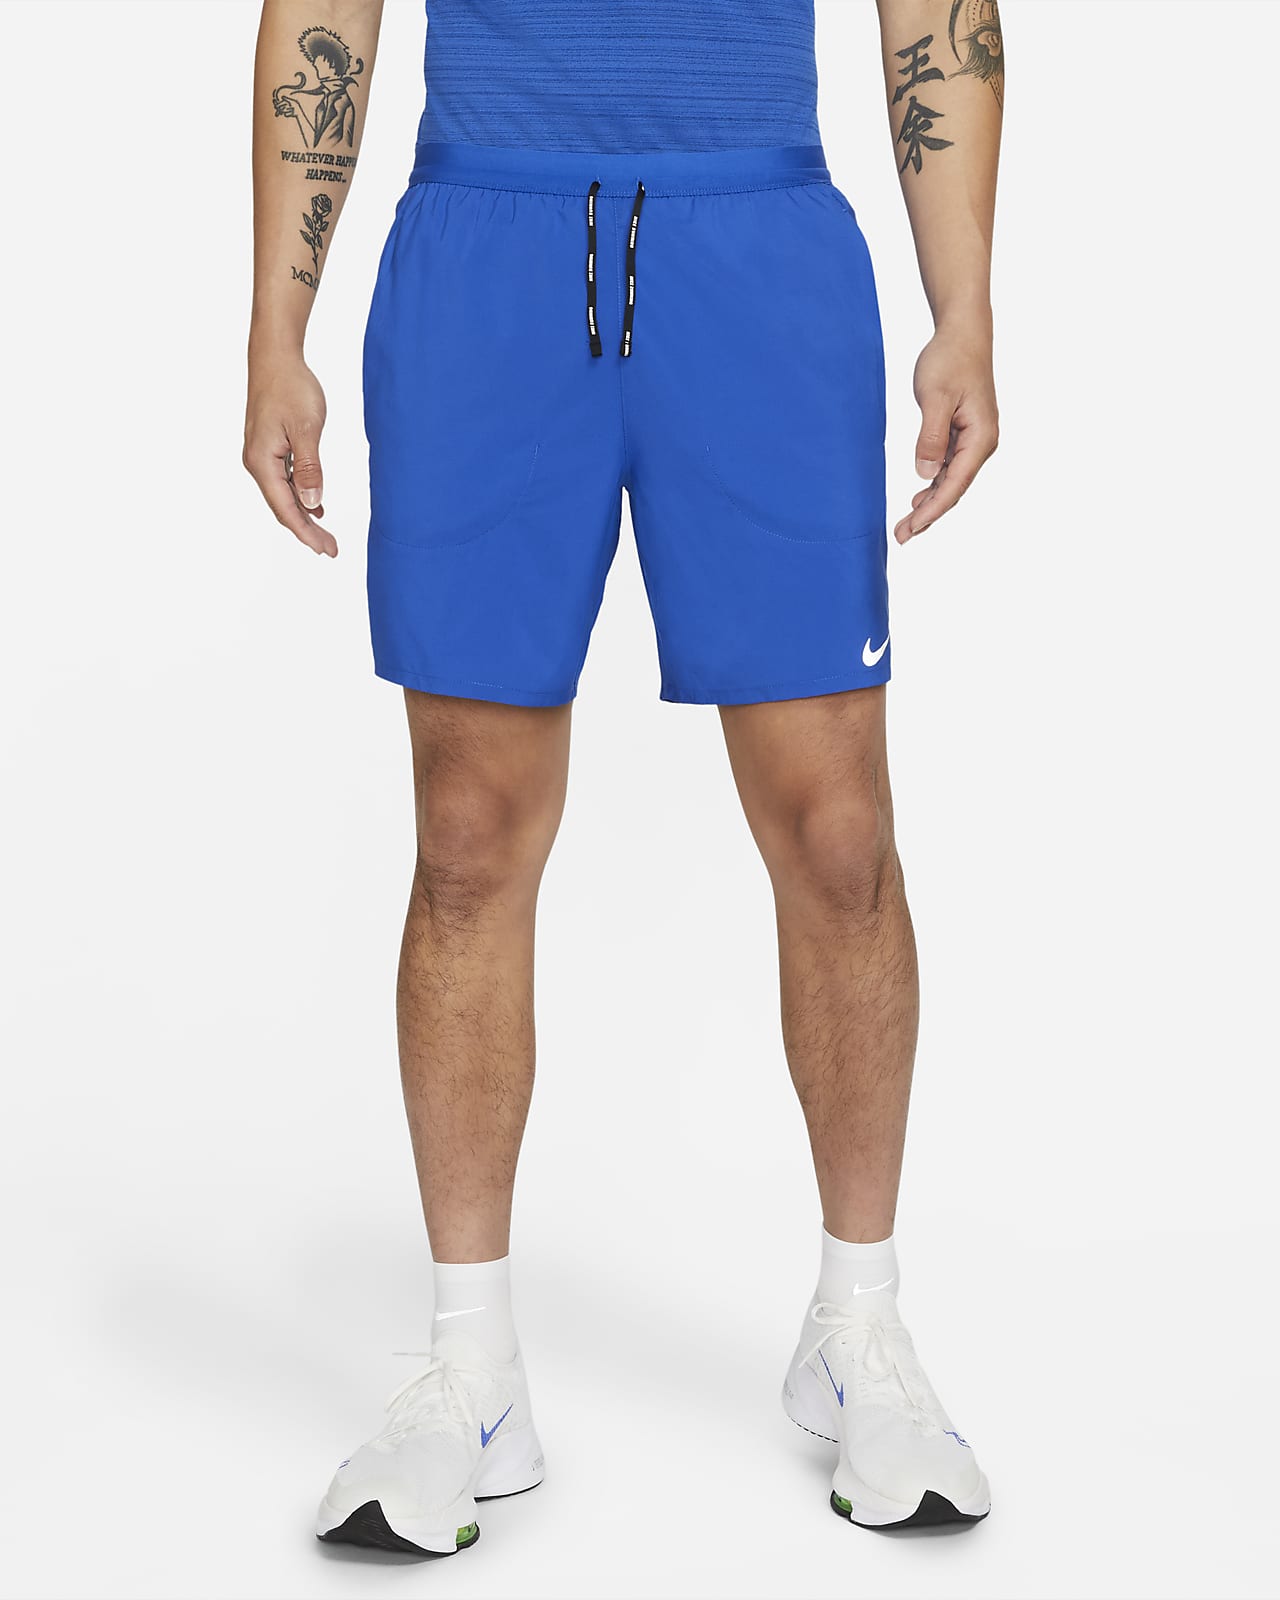 salvar Perseguir oscuridad Nike Flex Stride Pantalons curts amb eslip de running de 18 cm - Home. Nike  ES